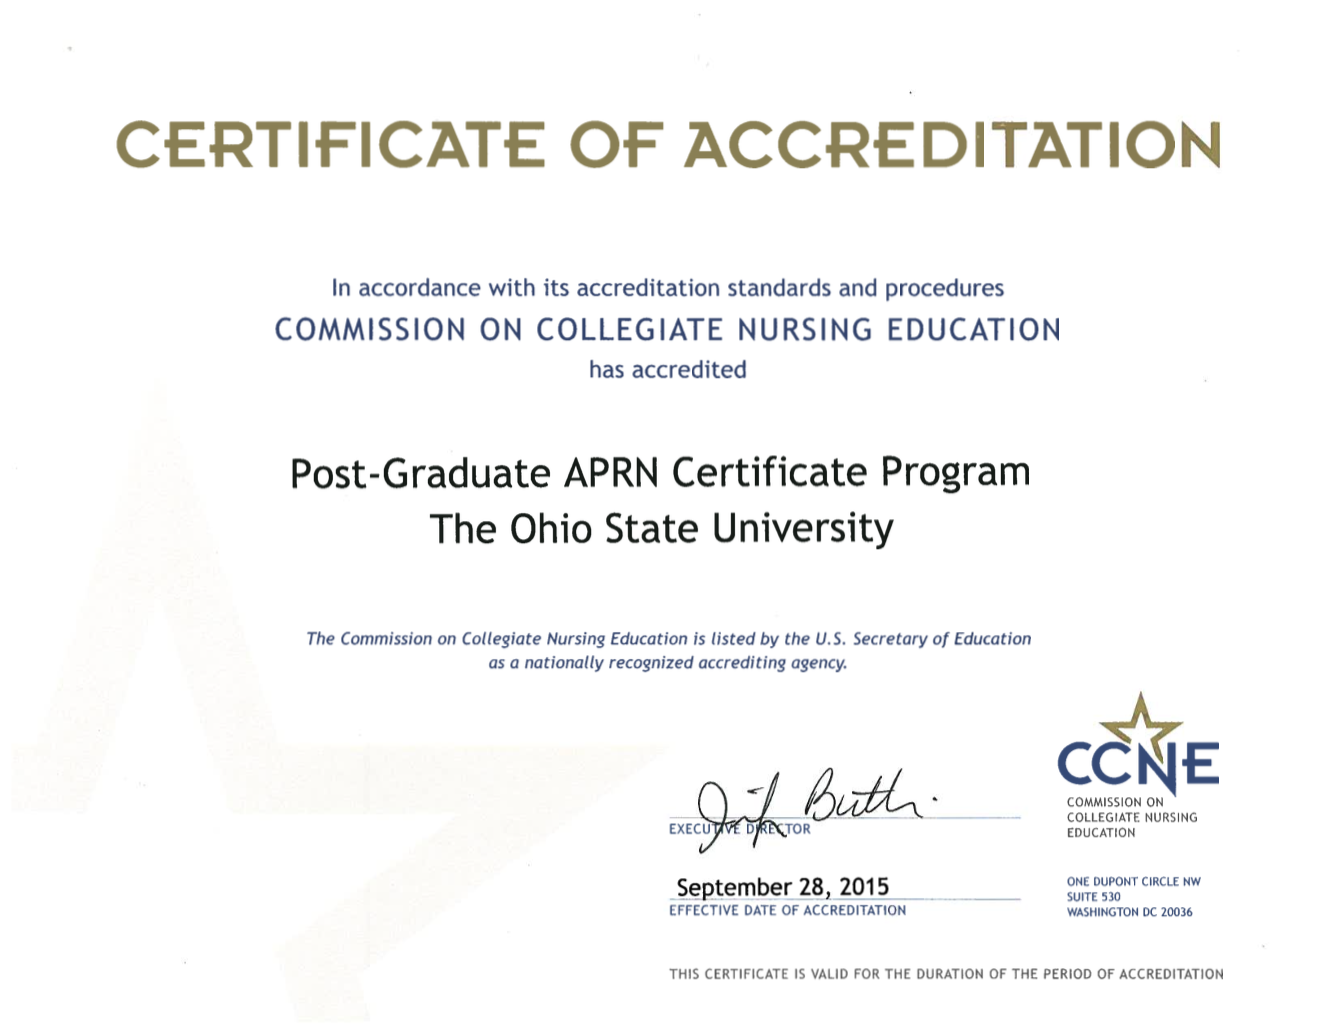 Post-Graduate APRN Certificate Program Accreditation Certificate